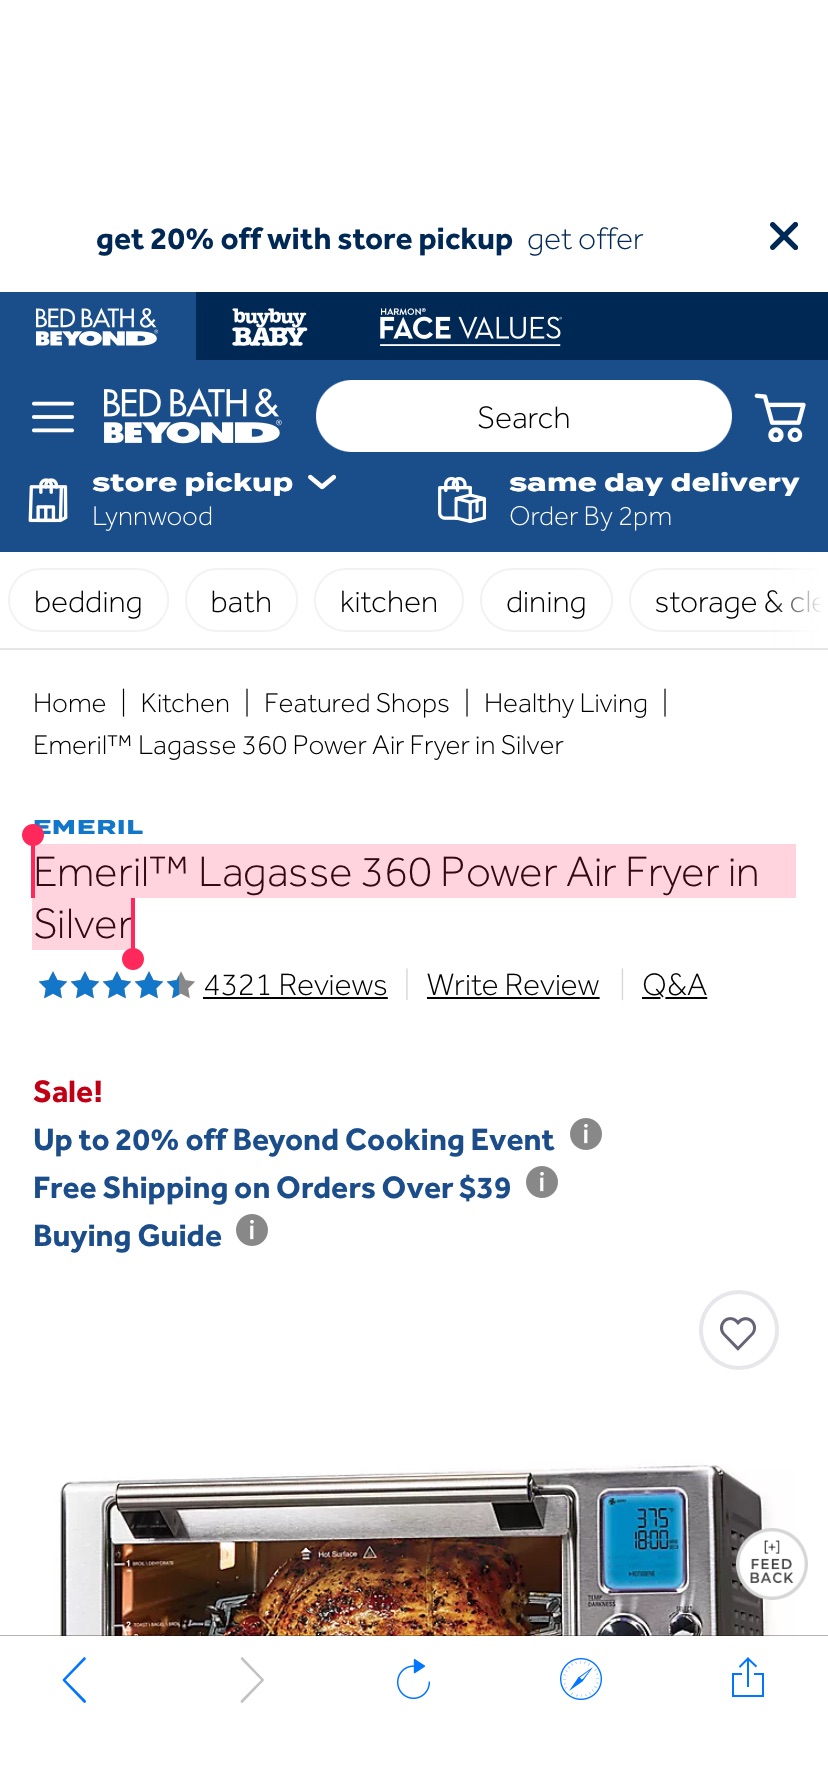 Emeril™ Lagasse 360 Power Air Fryer in Silver | Bed Bath & Beyond emeril网红空气炸锅